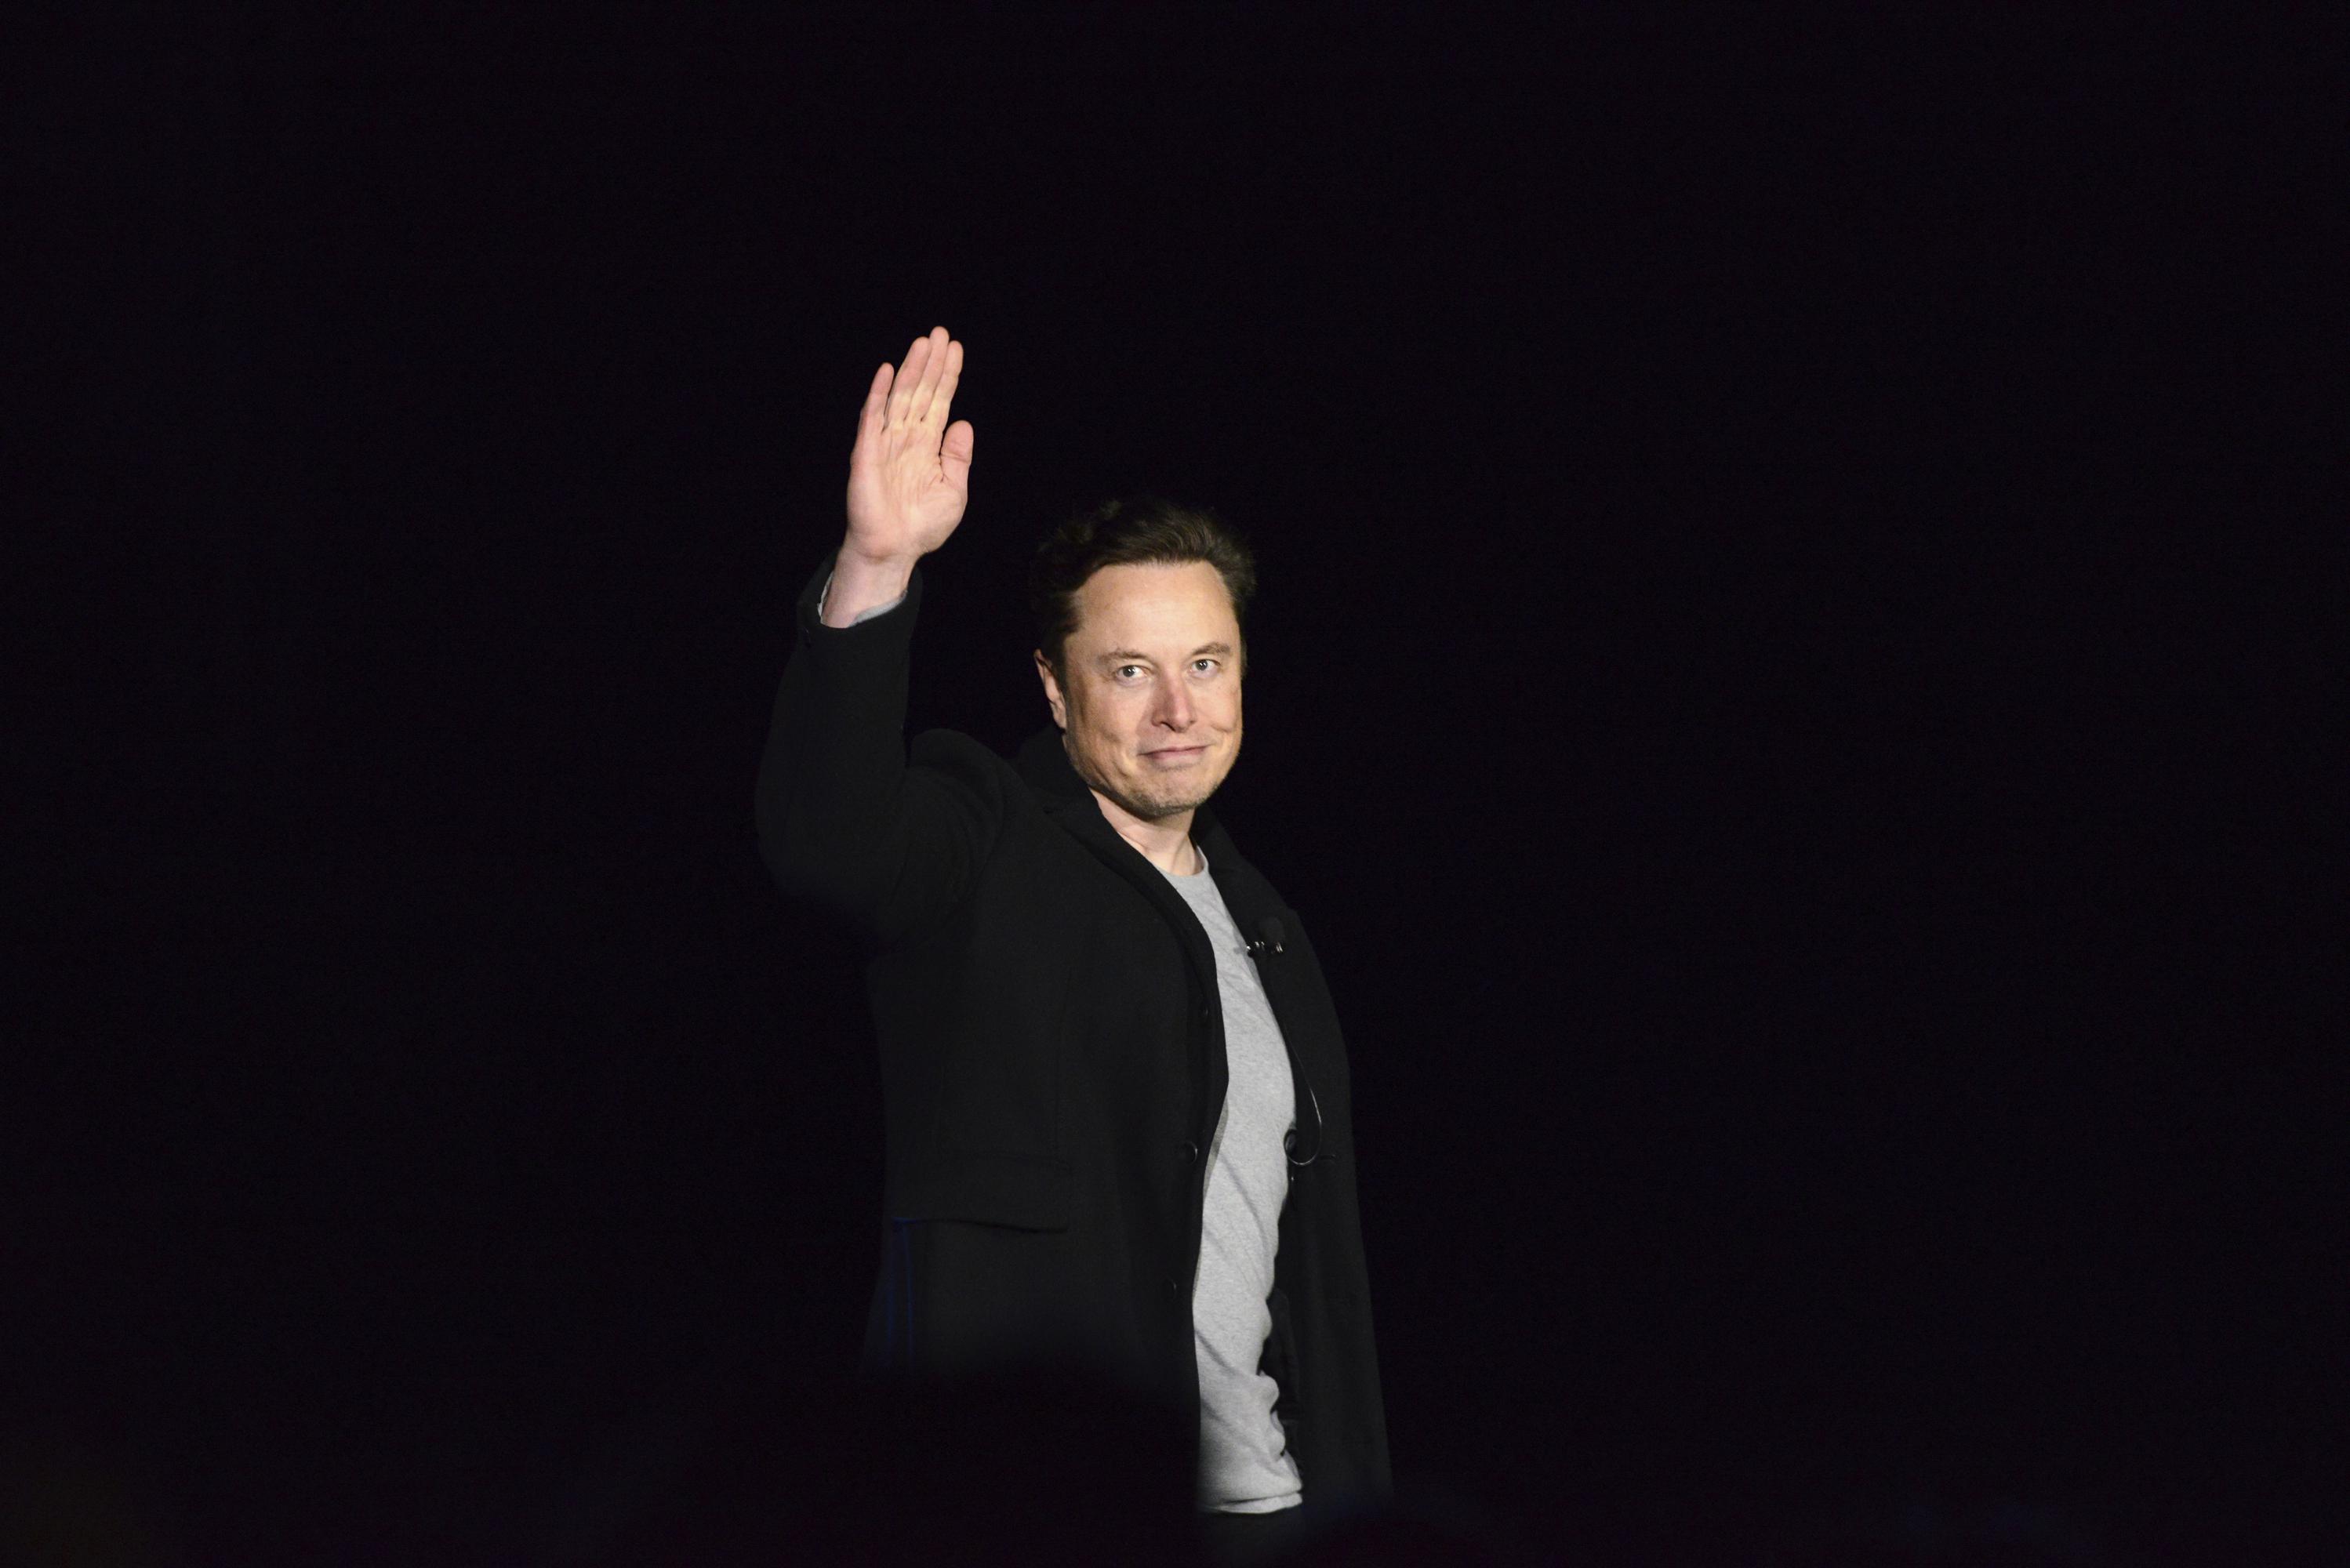 Accionistas de Tesla piden a juez que silencie a Musk en caso de fraude